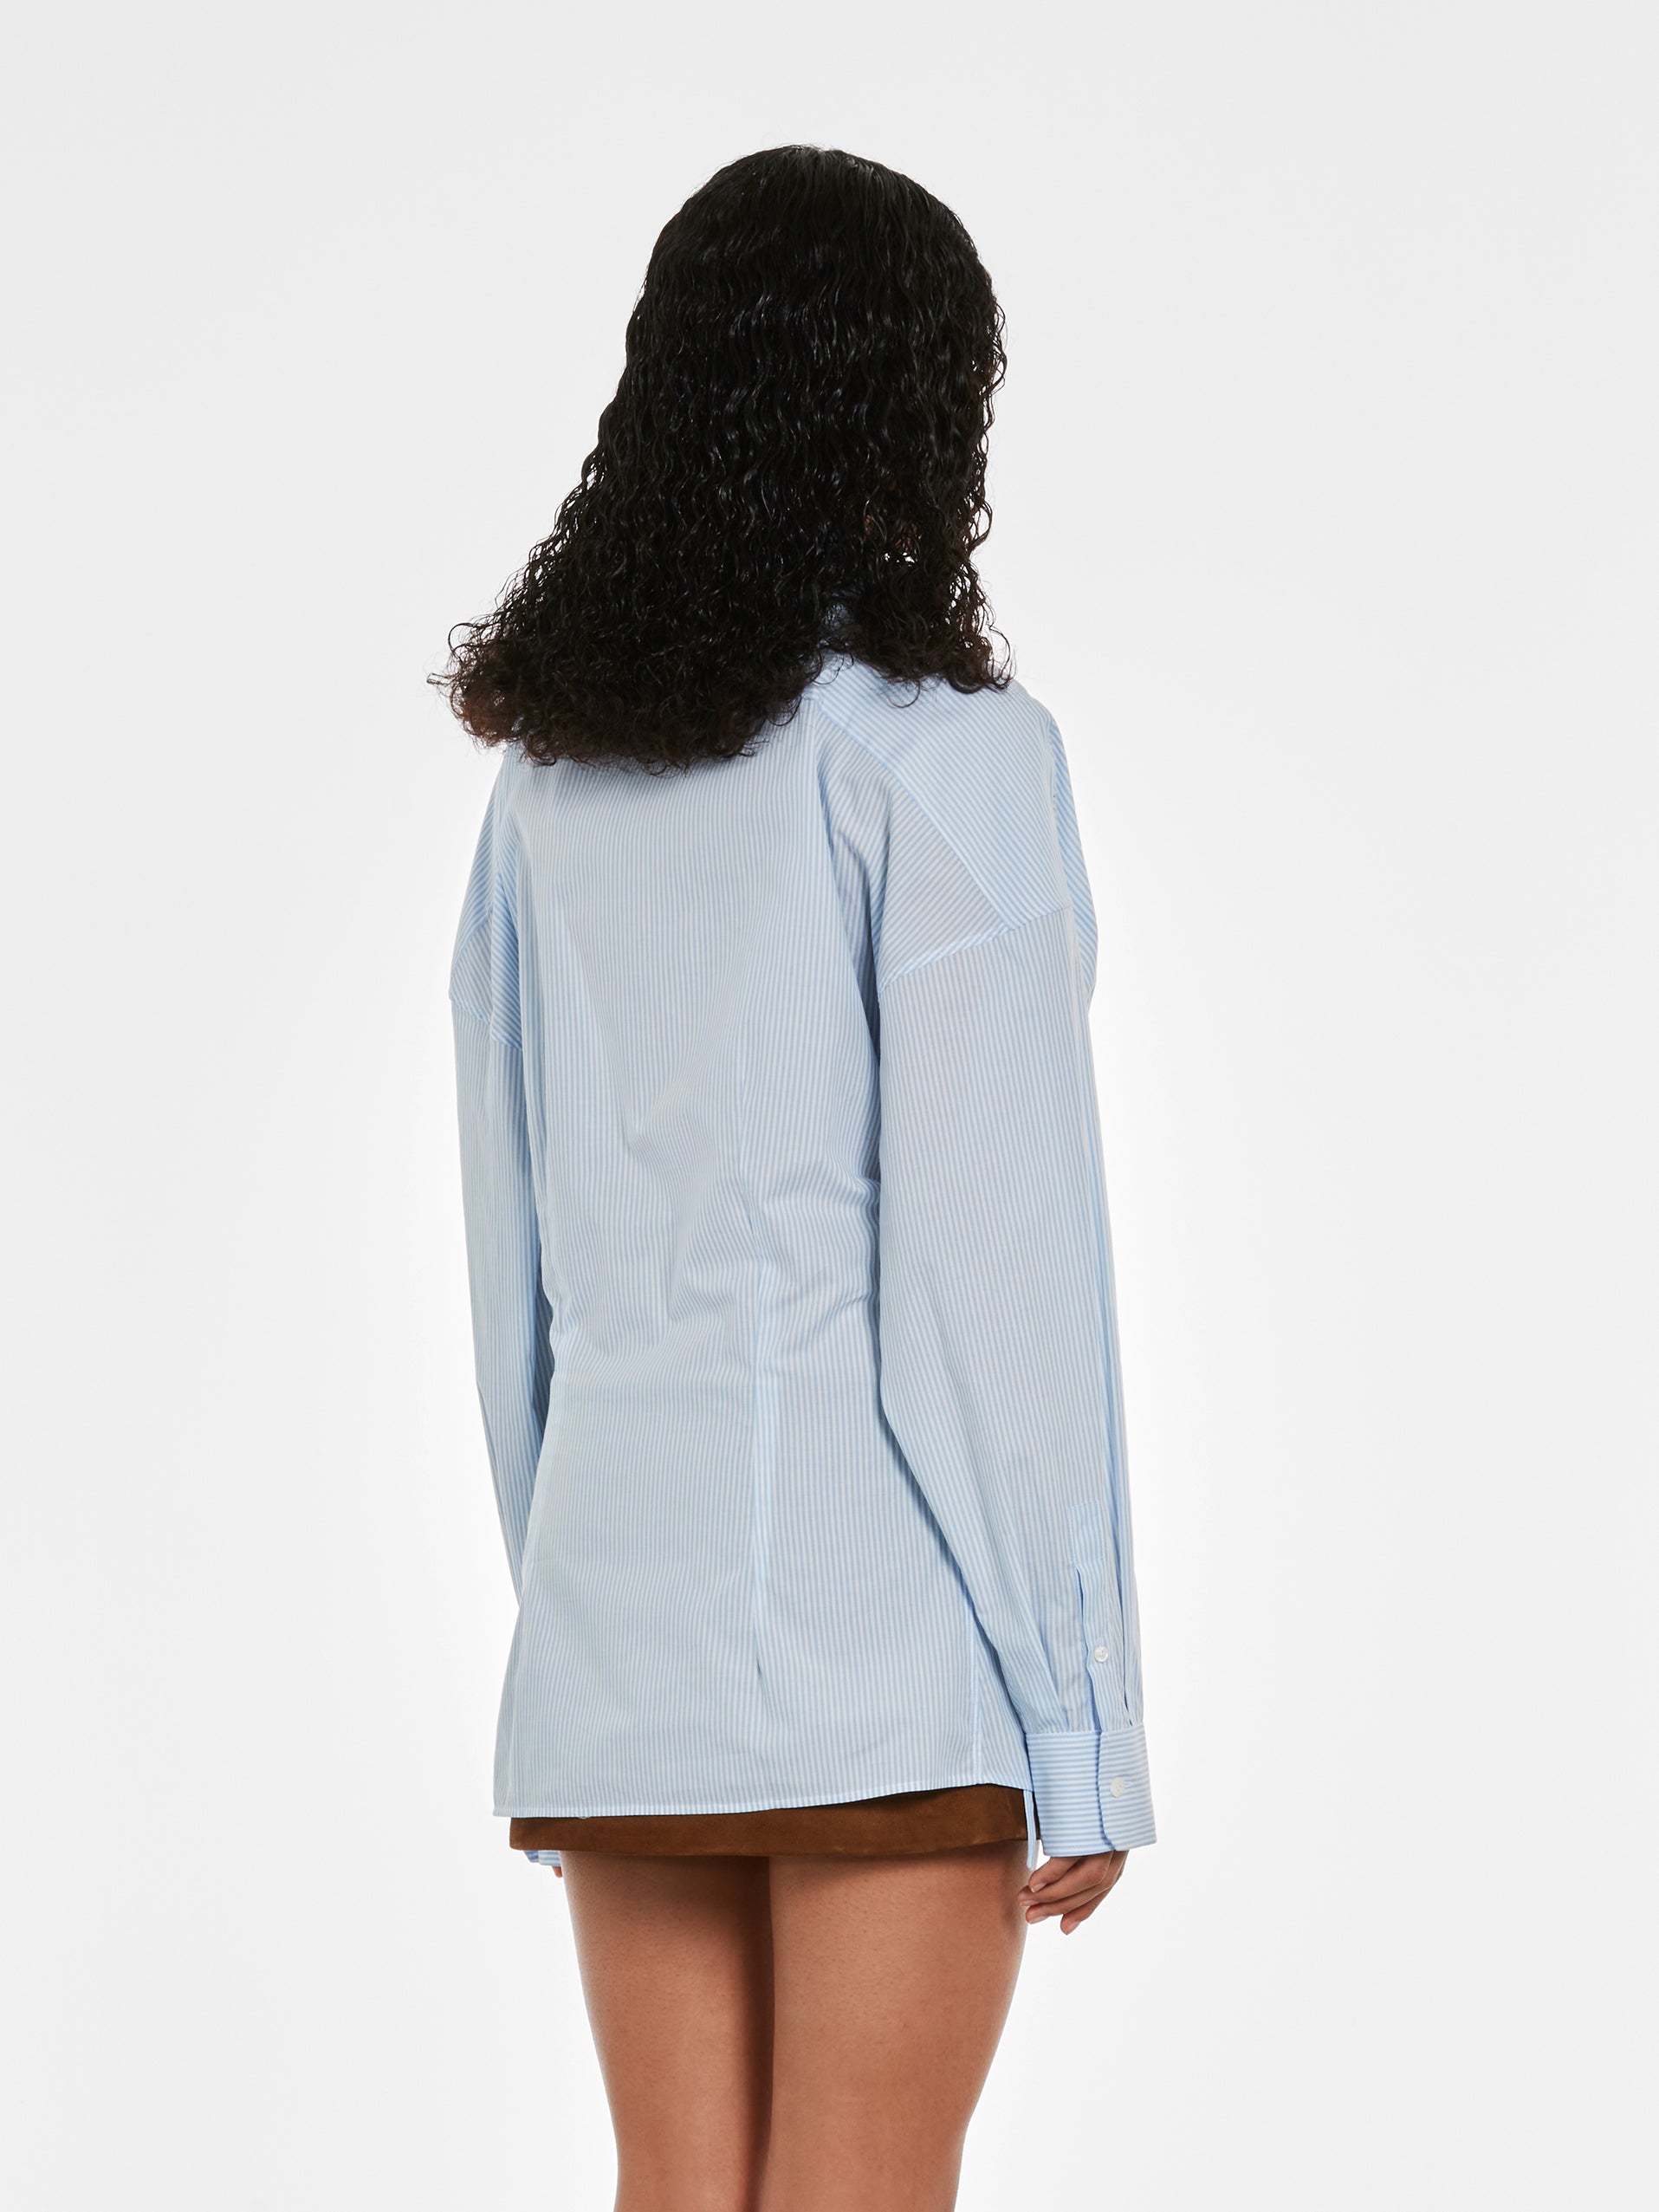 Prada - Women’s Shirt With Pin - (Blue Stripe) view 3